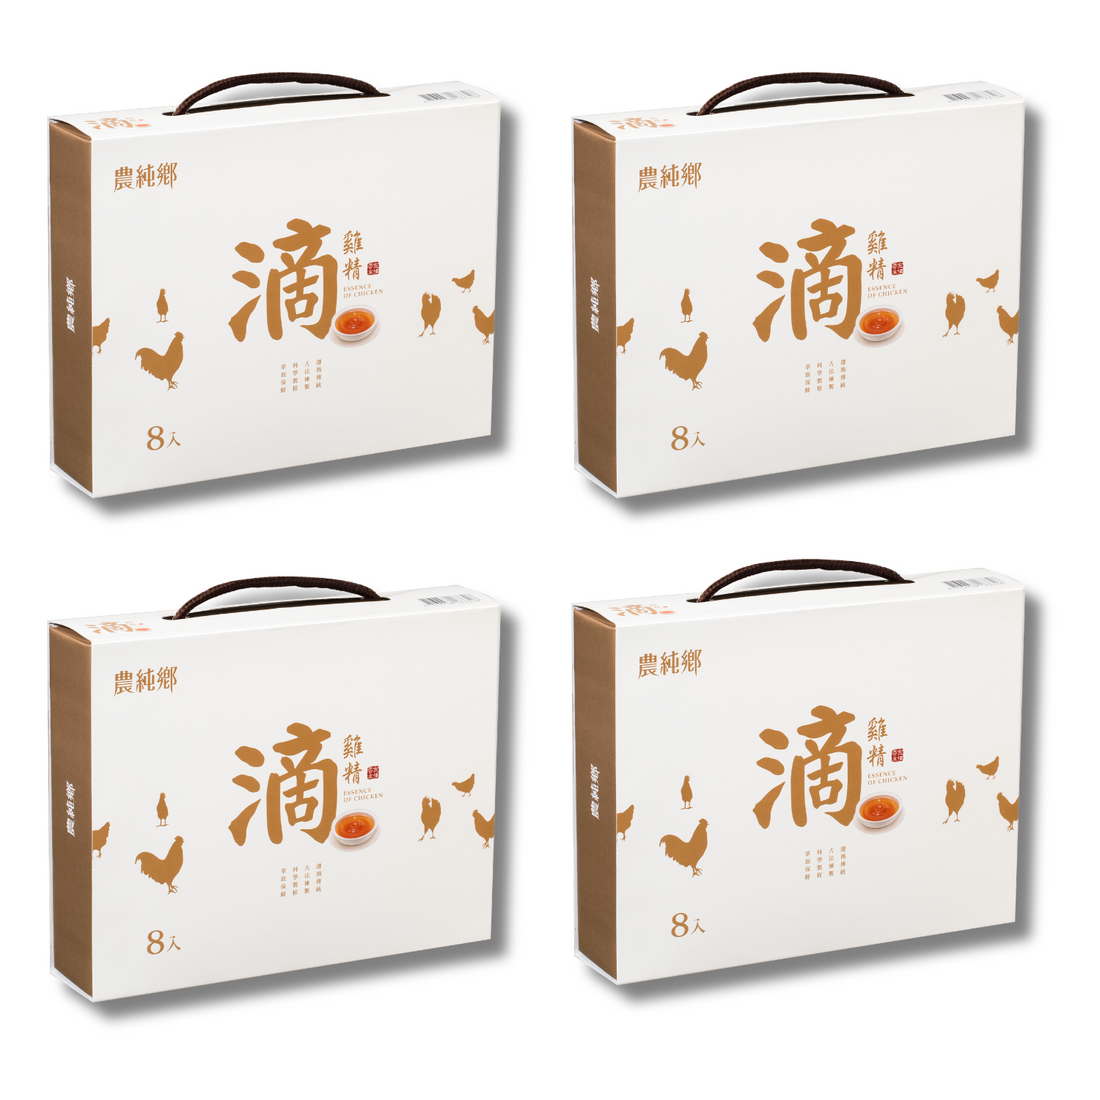 Nong Chun Xiang Chicken Essence x 4 packs【One Months Confinement】